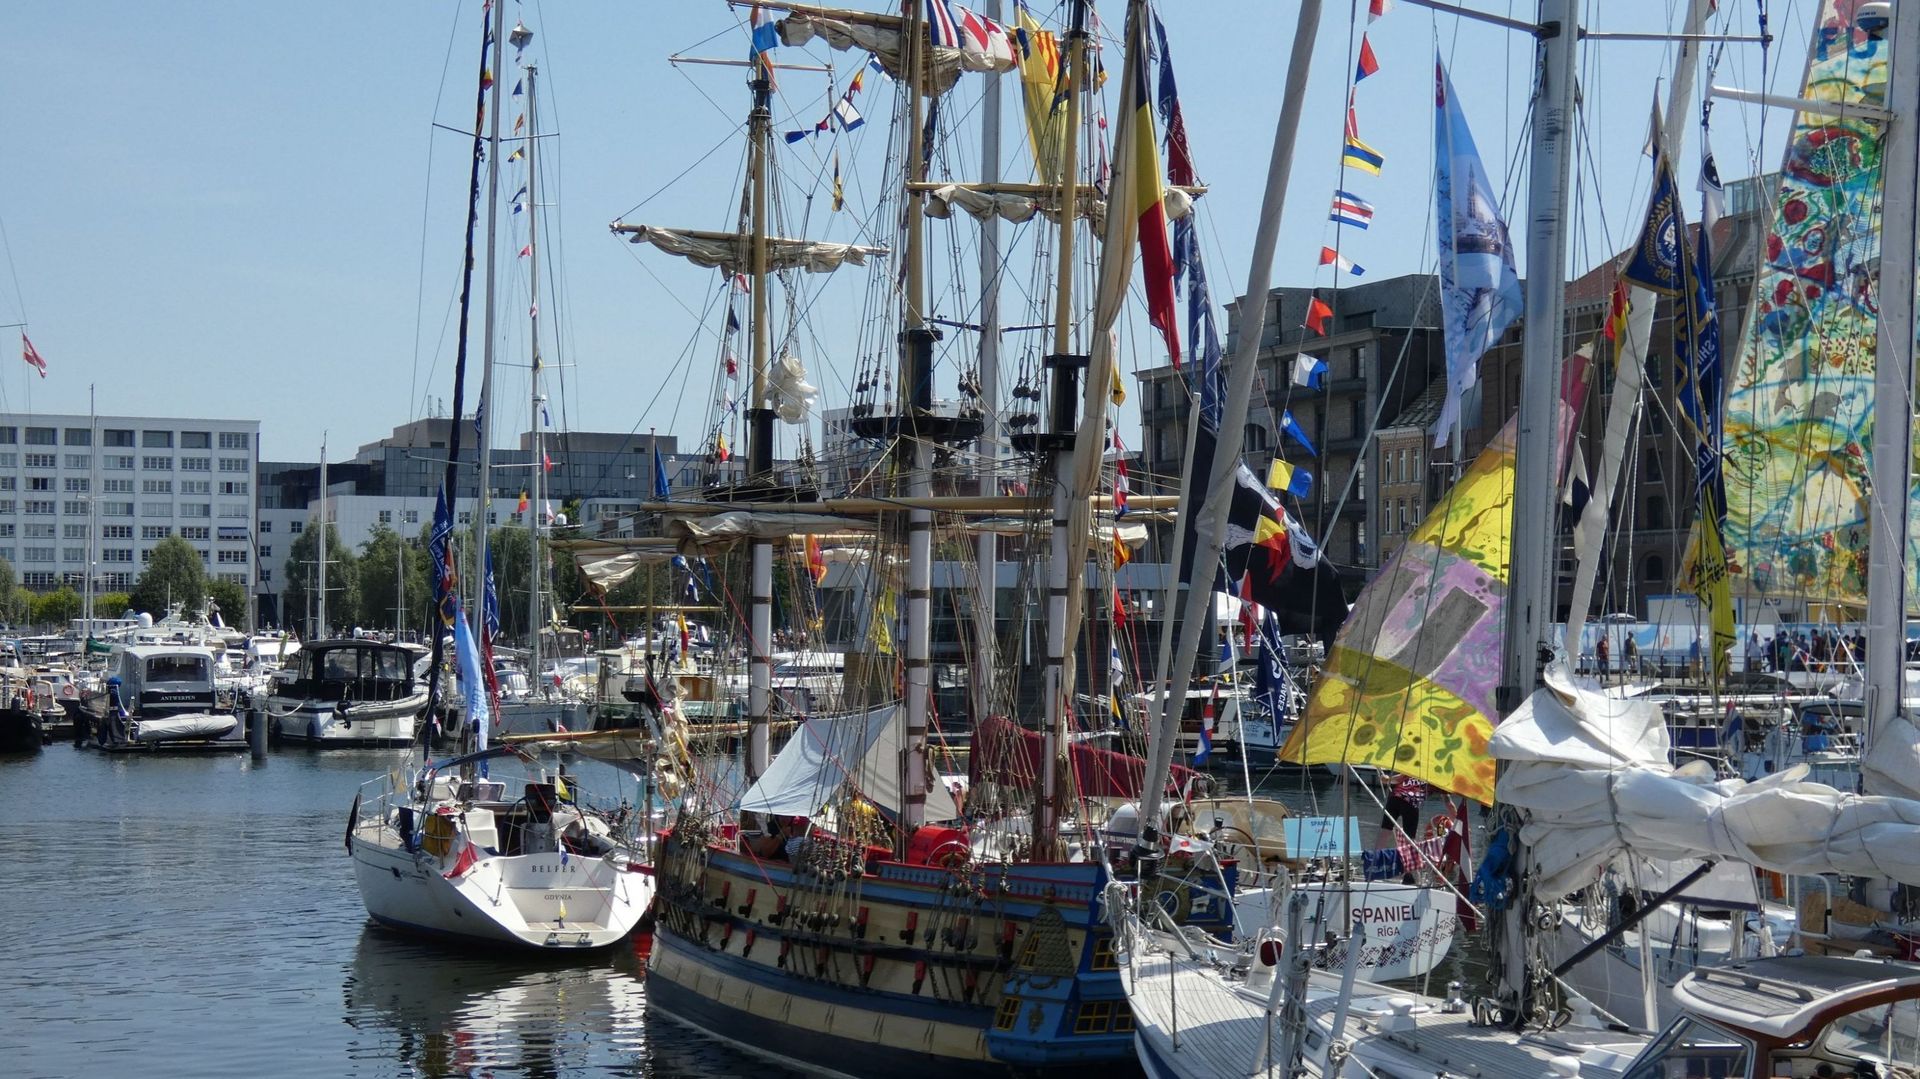 Les Tall Ships Races ce samedi 23 juillet